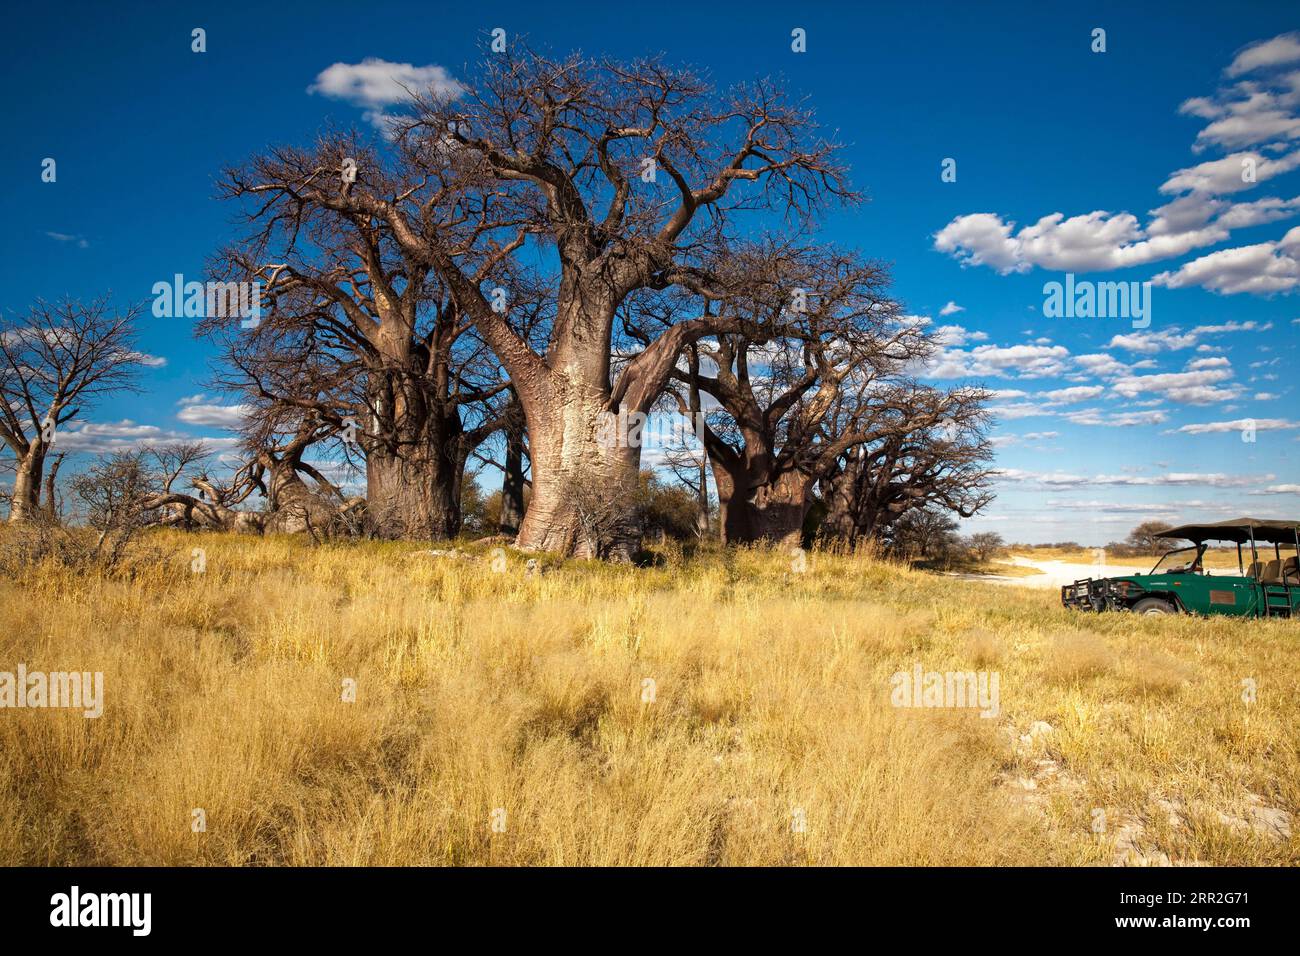 Gruppo di alberi con baobab africano molto antico (Adansonia digitata), Baines Baobabs, Nxai Pan National Park, Botswana Foto Stock